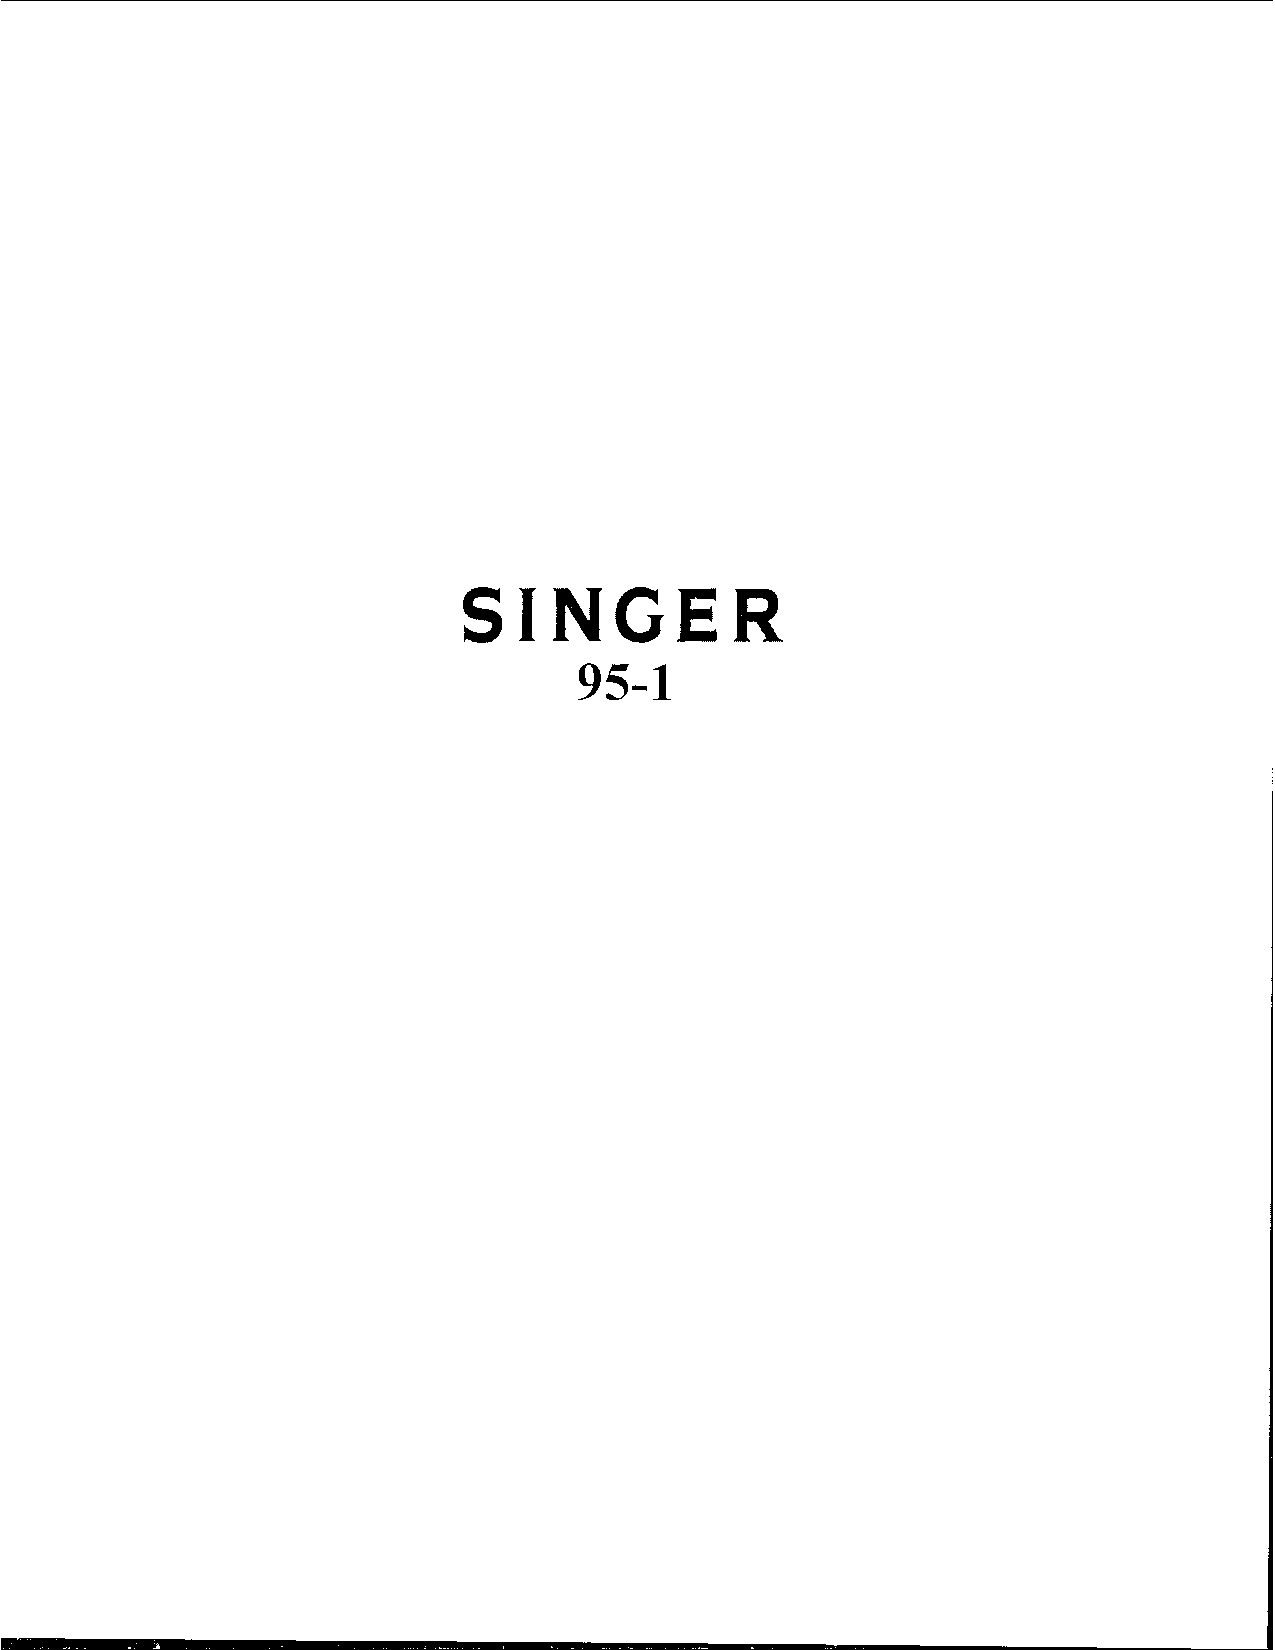 Singer 95-1 User Manual